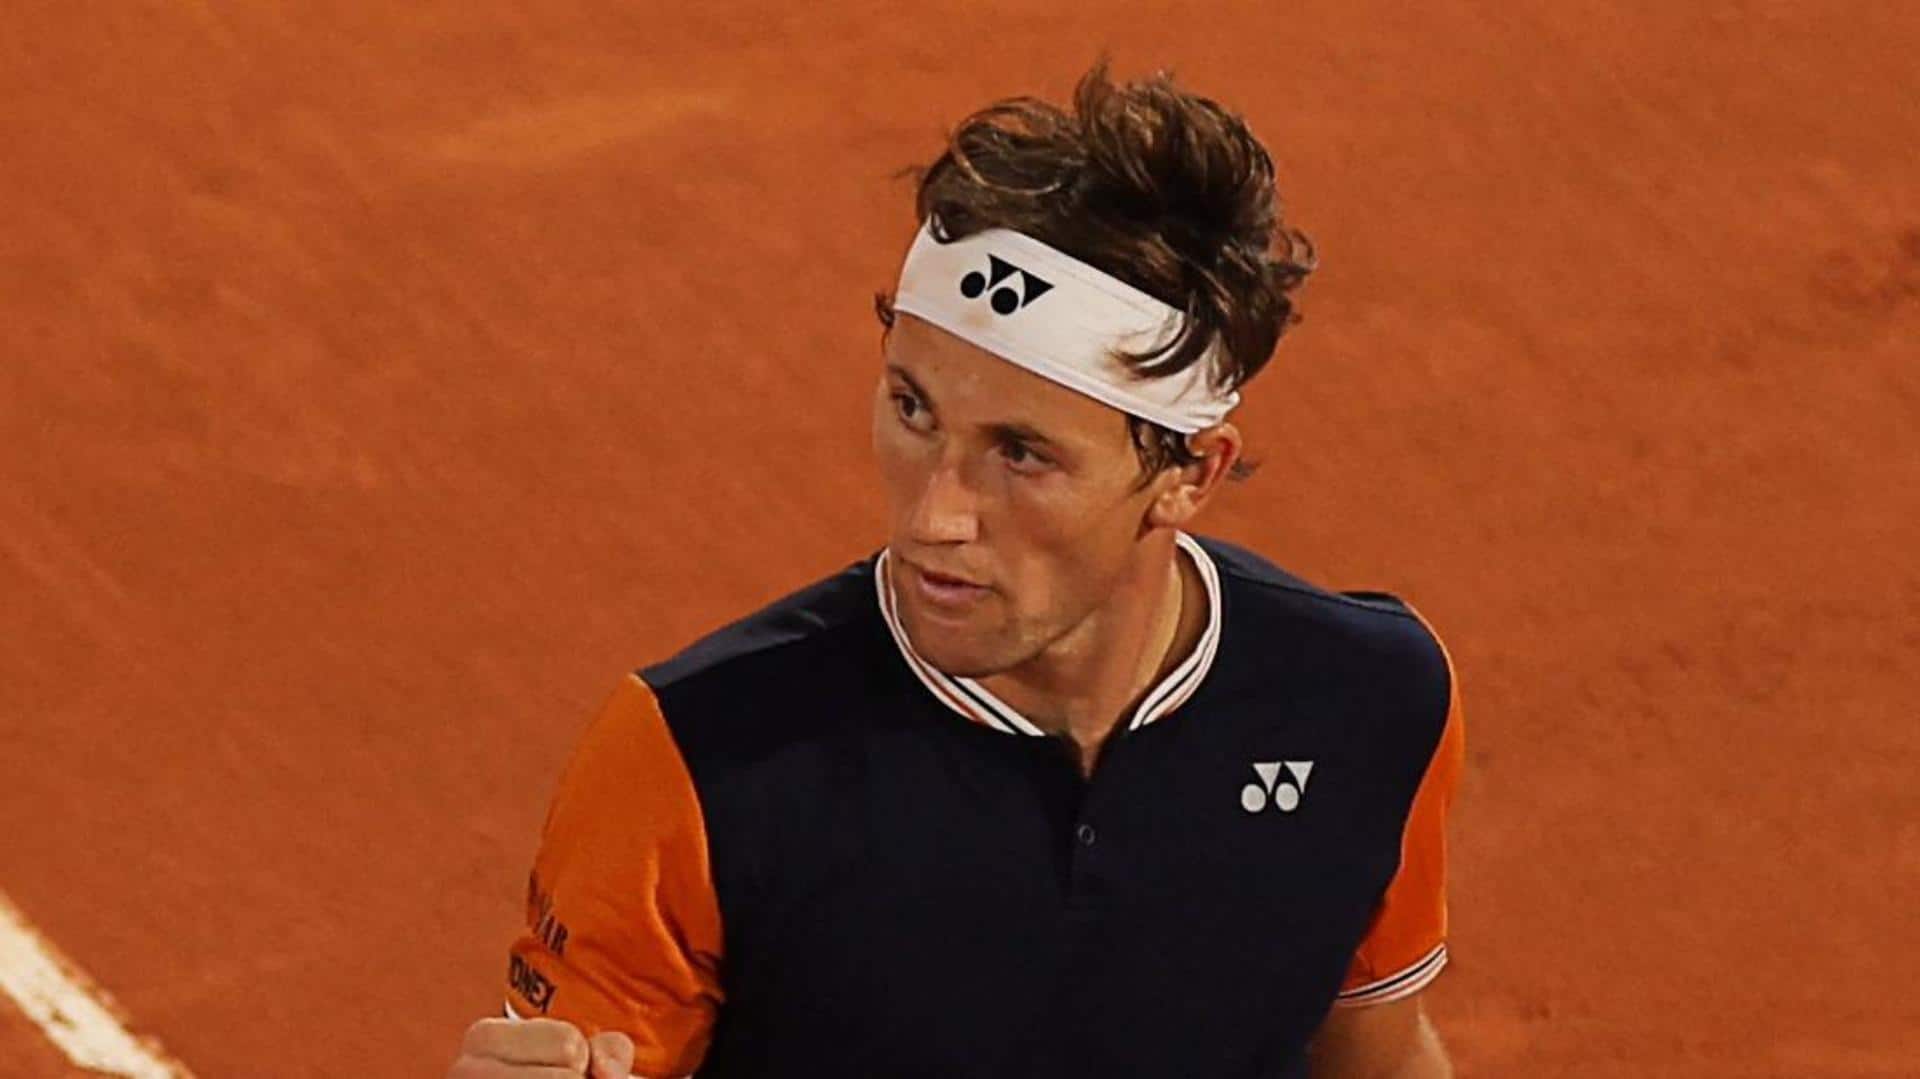 2023 French Open, Casper Ruud reaches semi-final: Key stats